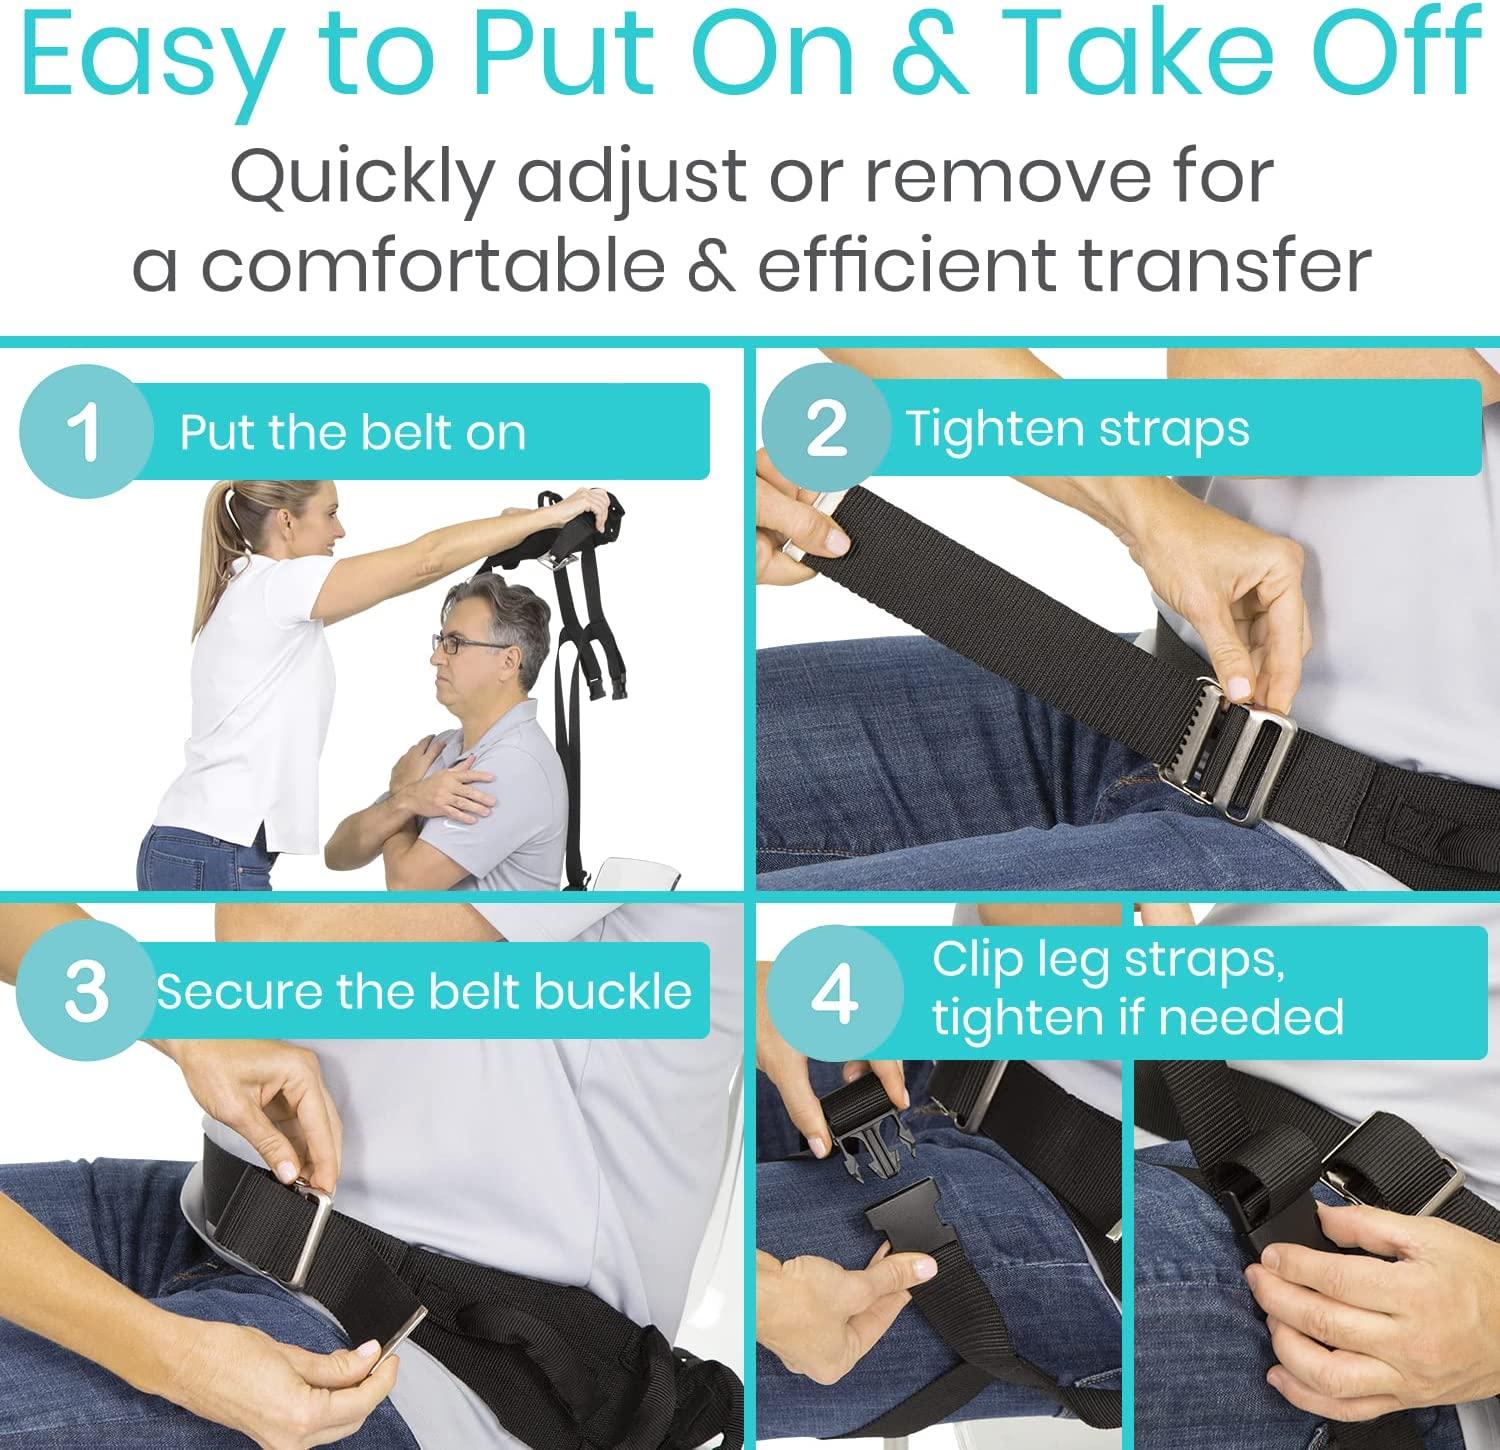 Easy-Clean Transfer Belt - Vive Health